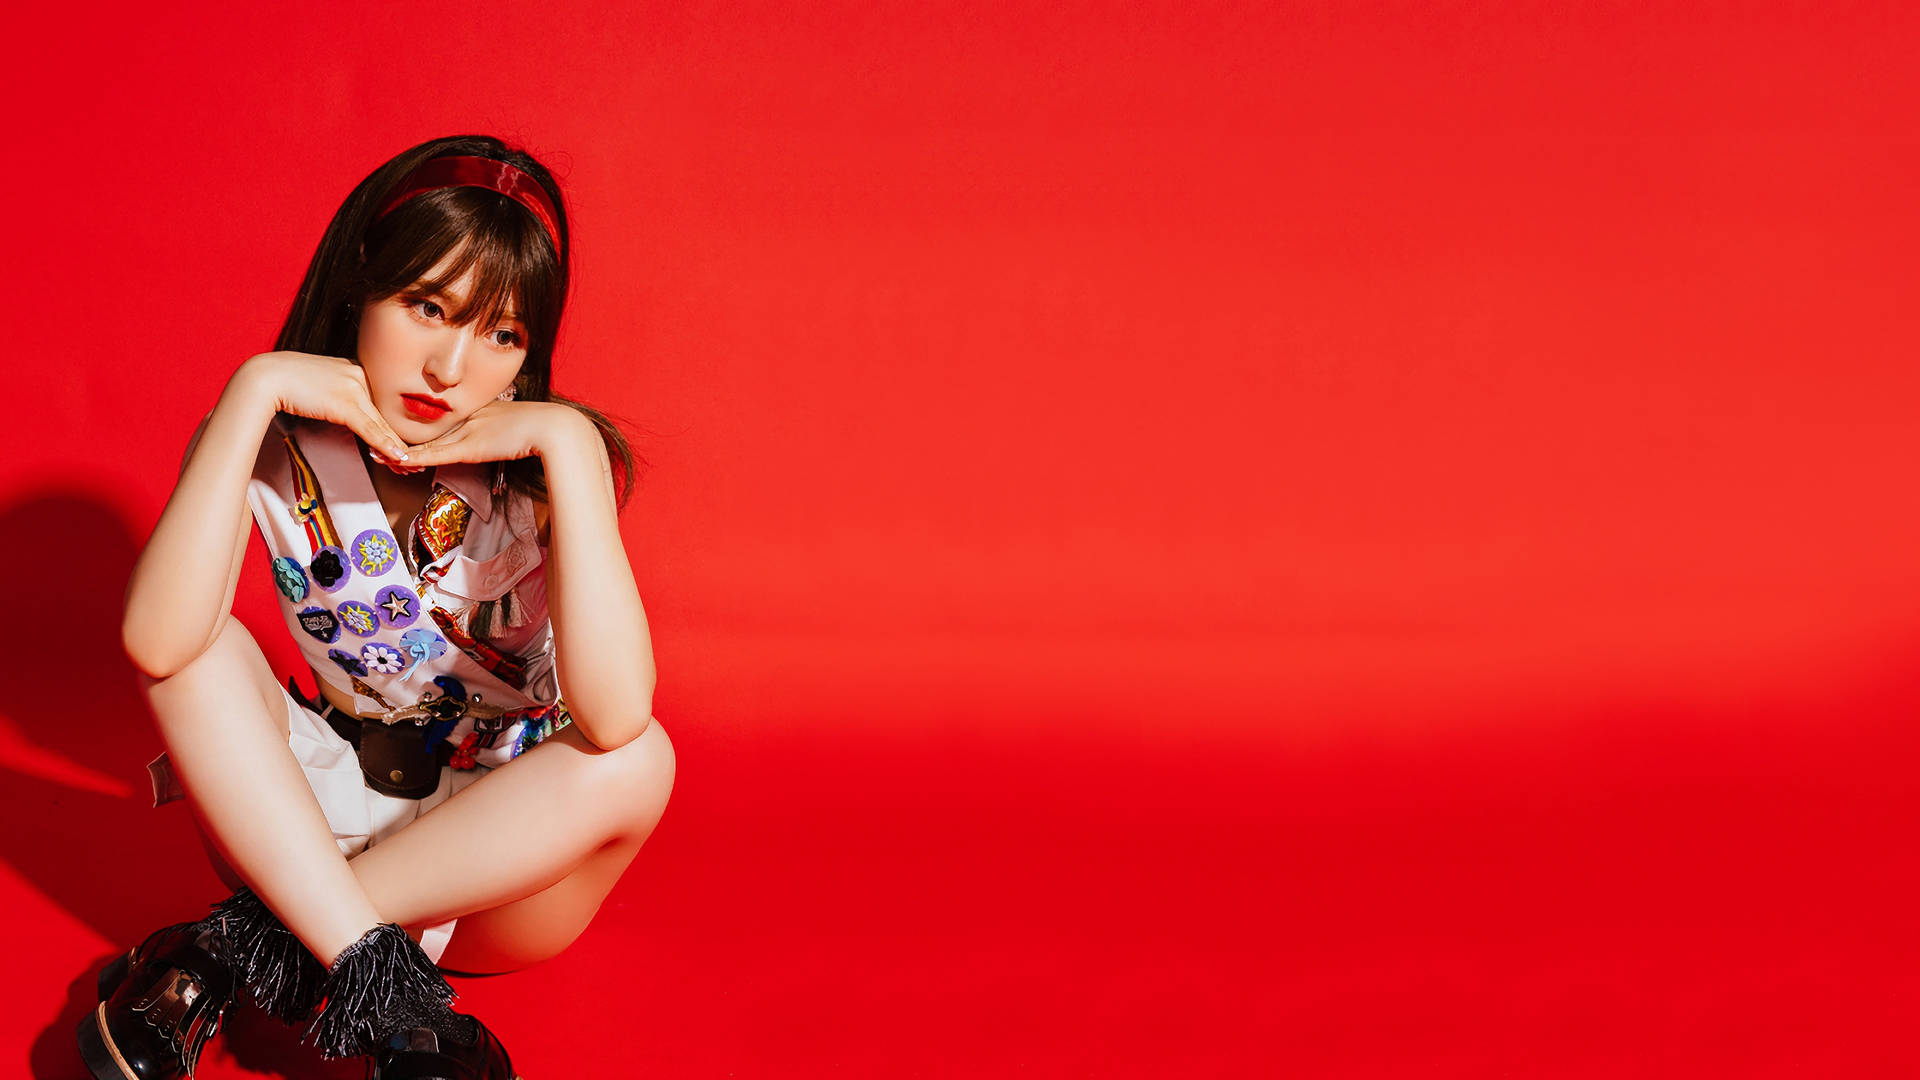 Red Velvet 3840X2160 Wallpaper and Background Image